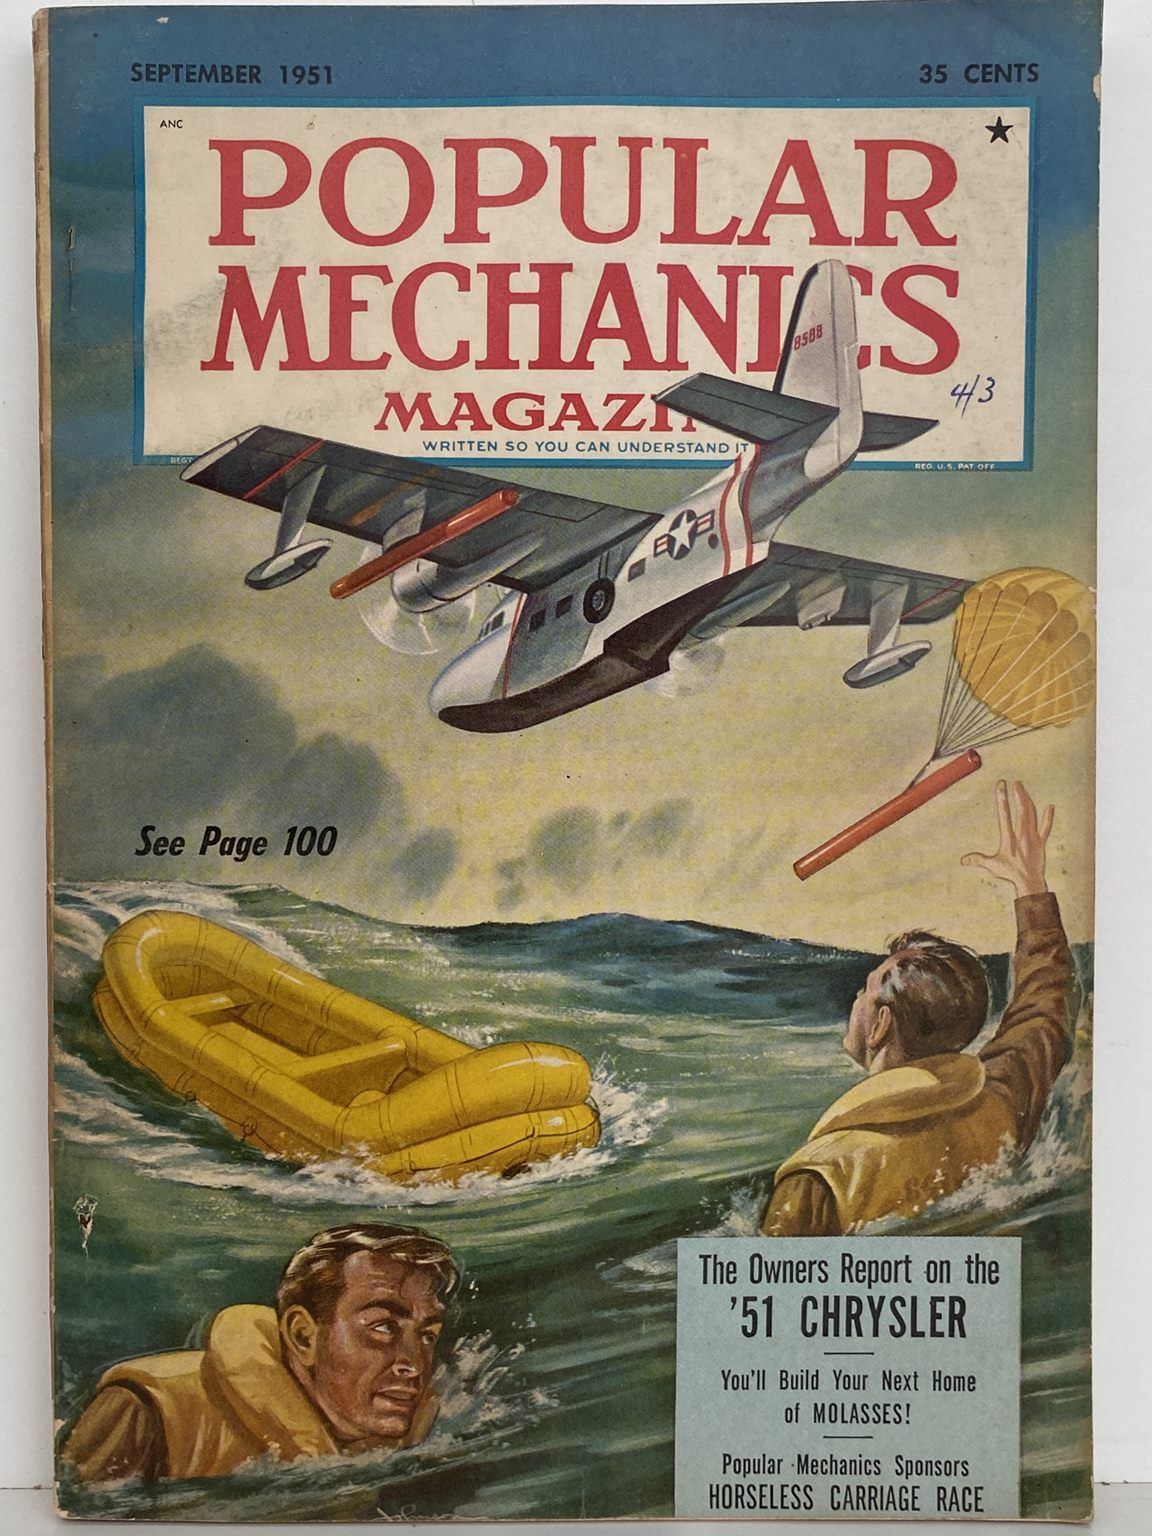 VINTAGE MAGAZINE: Popular Mechanics - Vol. 96, No. 3 - September 1951